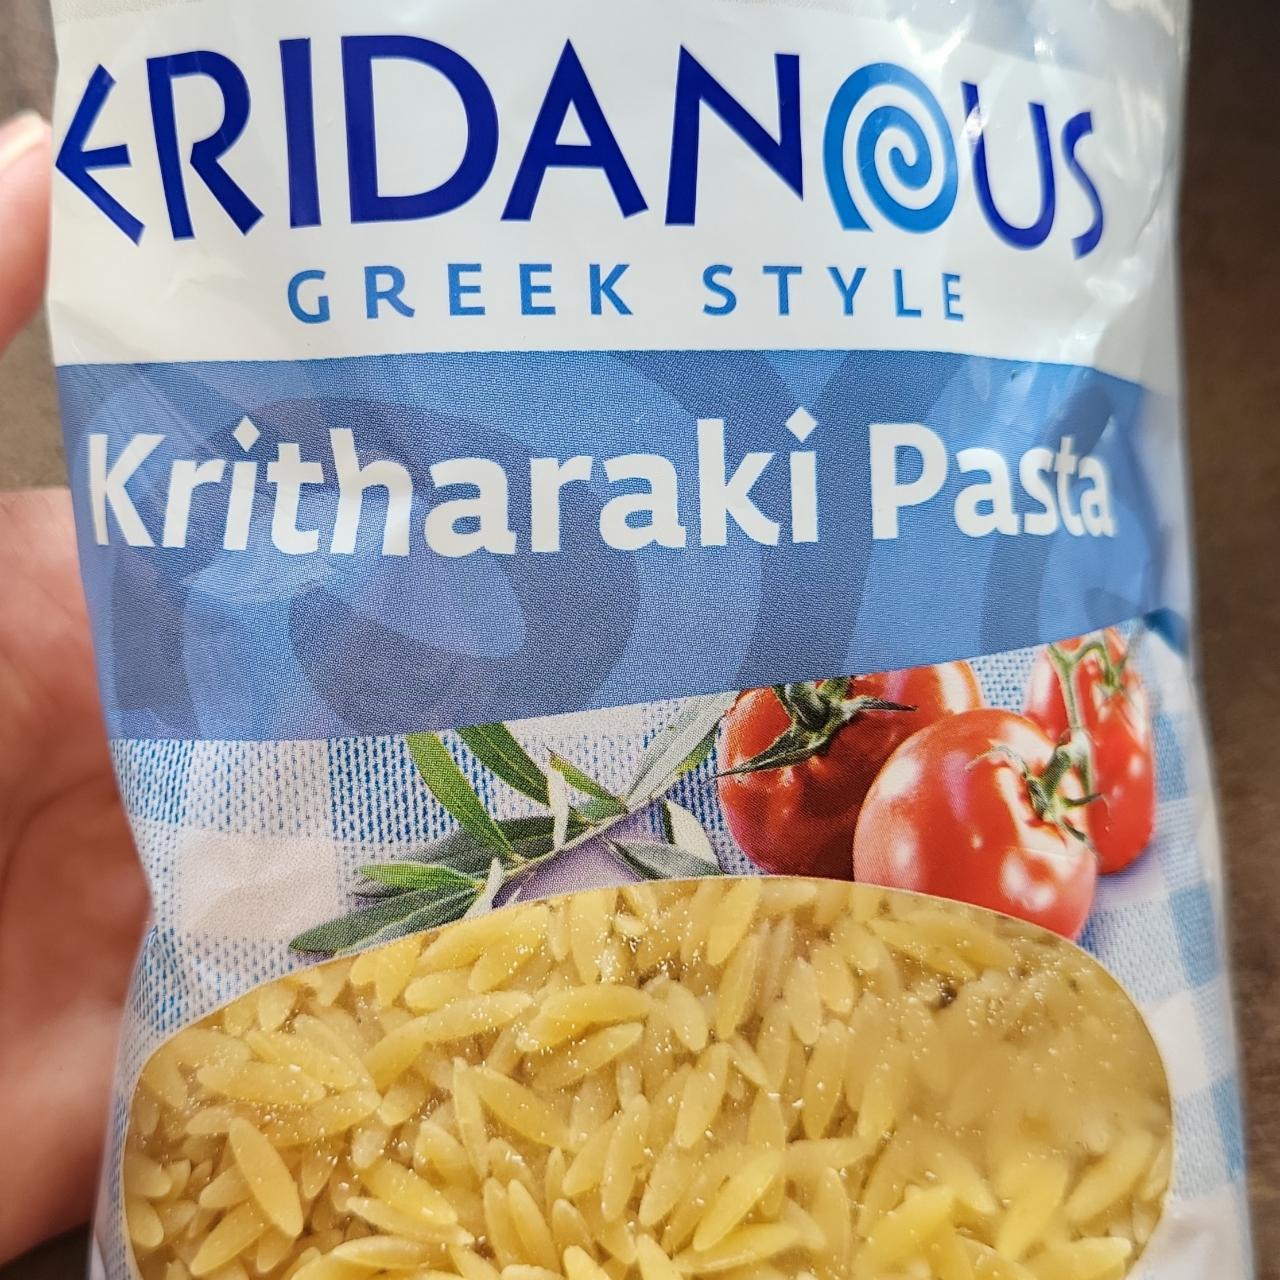 Fotografie - Kritharaki Pasta Eridanous